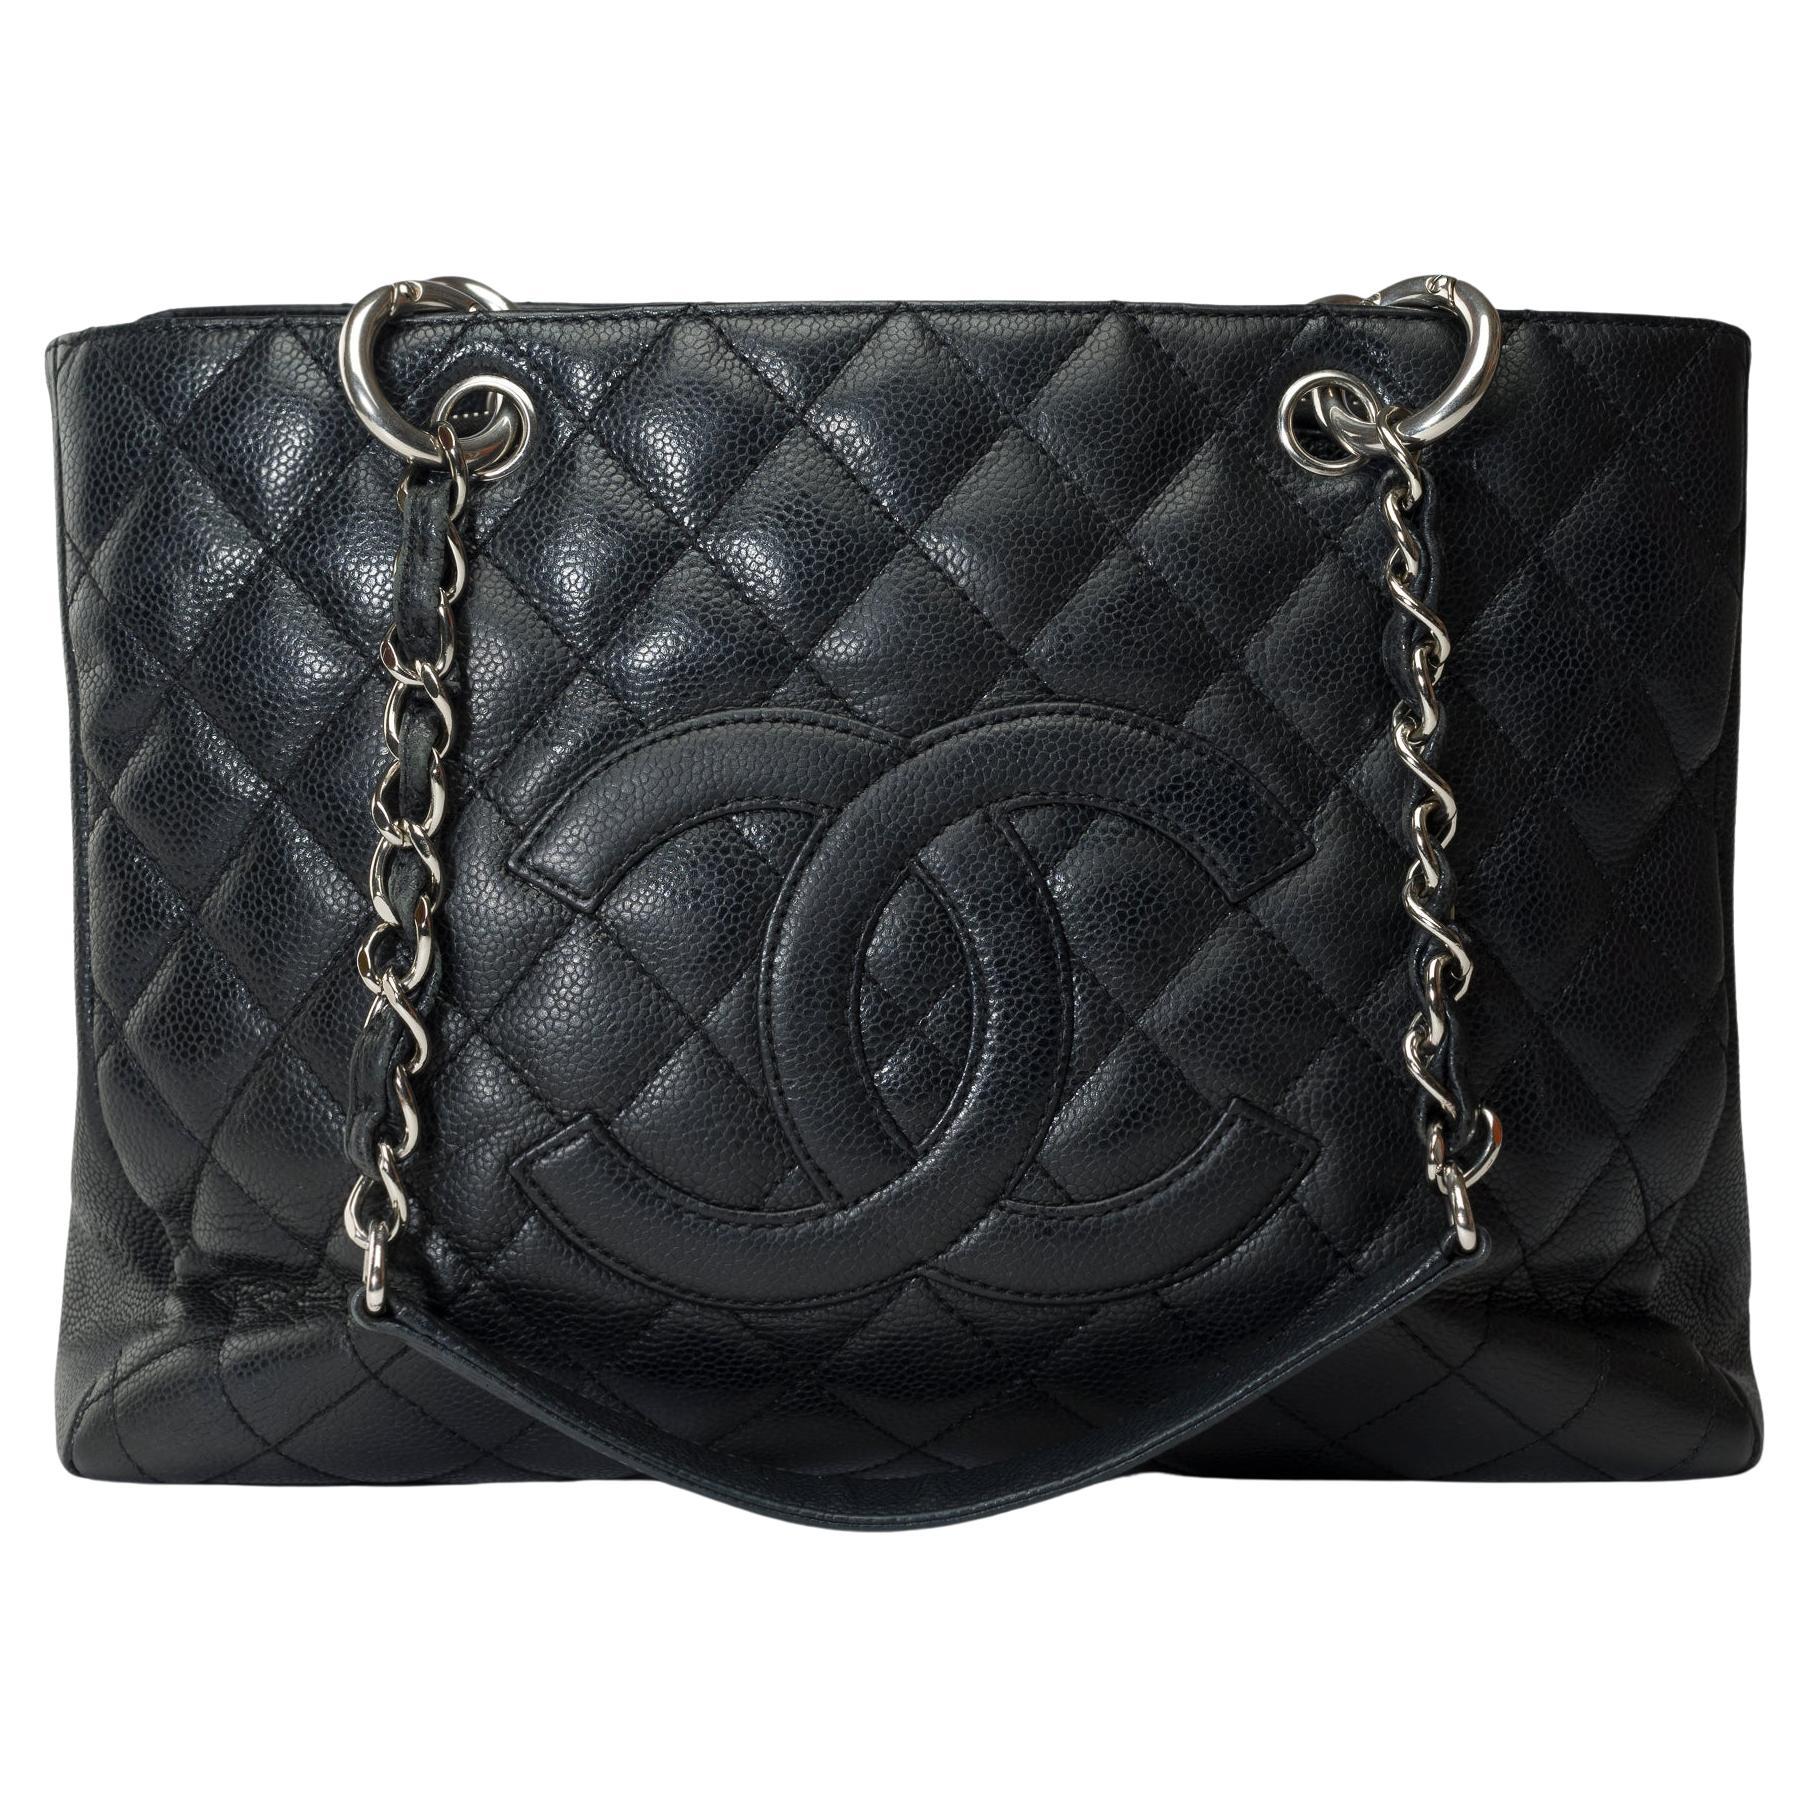  Chanel Grand Shopping Tote bag (GST) en cuir matelassé Caviar noir, SHW en vente